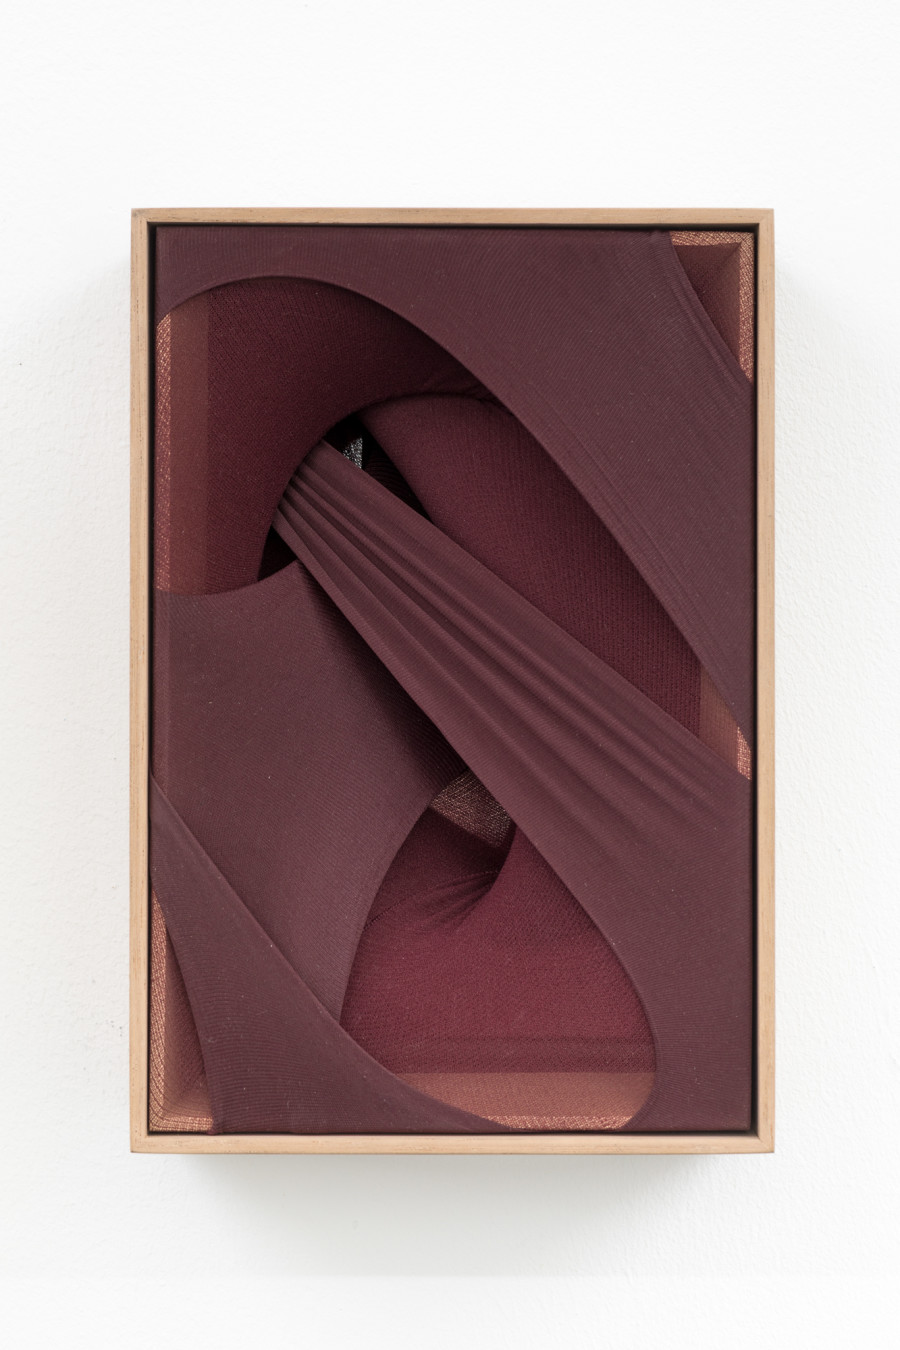 Martín Soto Climént, Gossip Wine Melody, 2022, tights and plexiglass mirror mounted in red cedar wood box, 31 x 21 x 10 cm. Photo: Kilian Bannwart